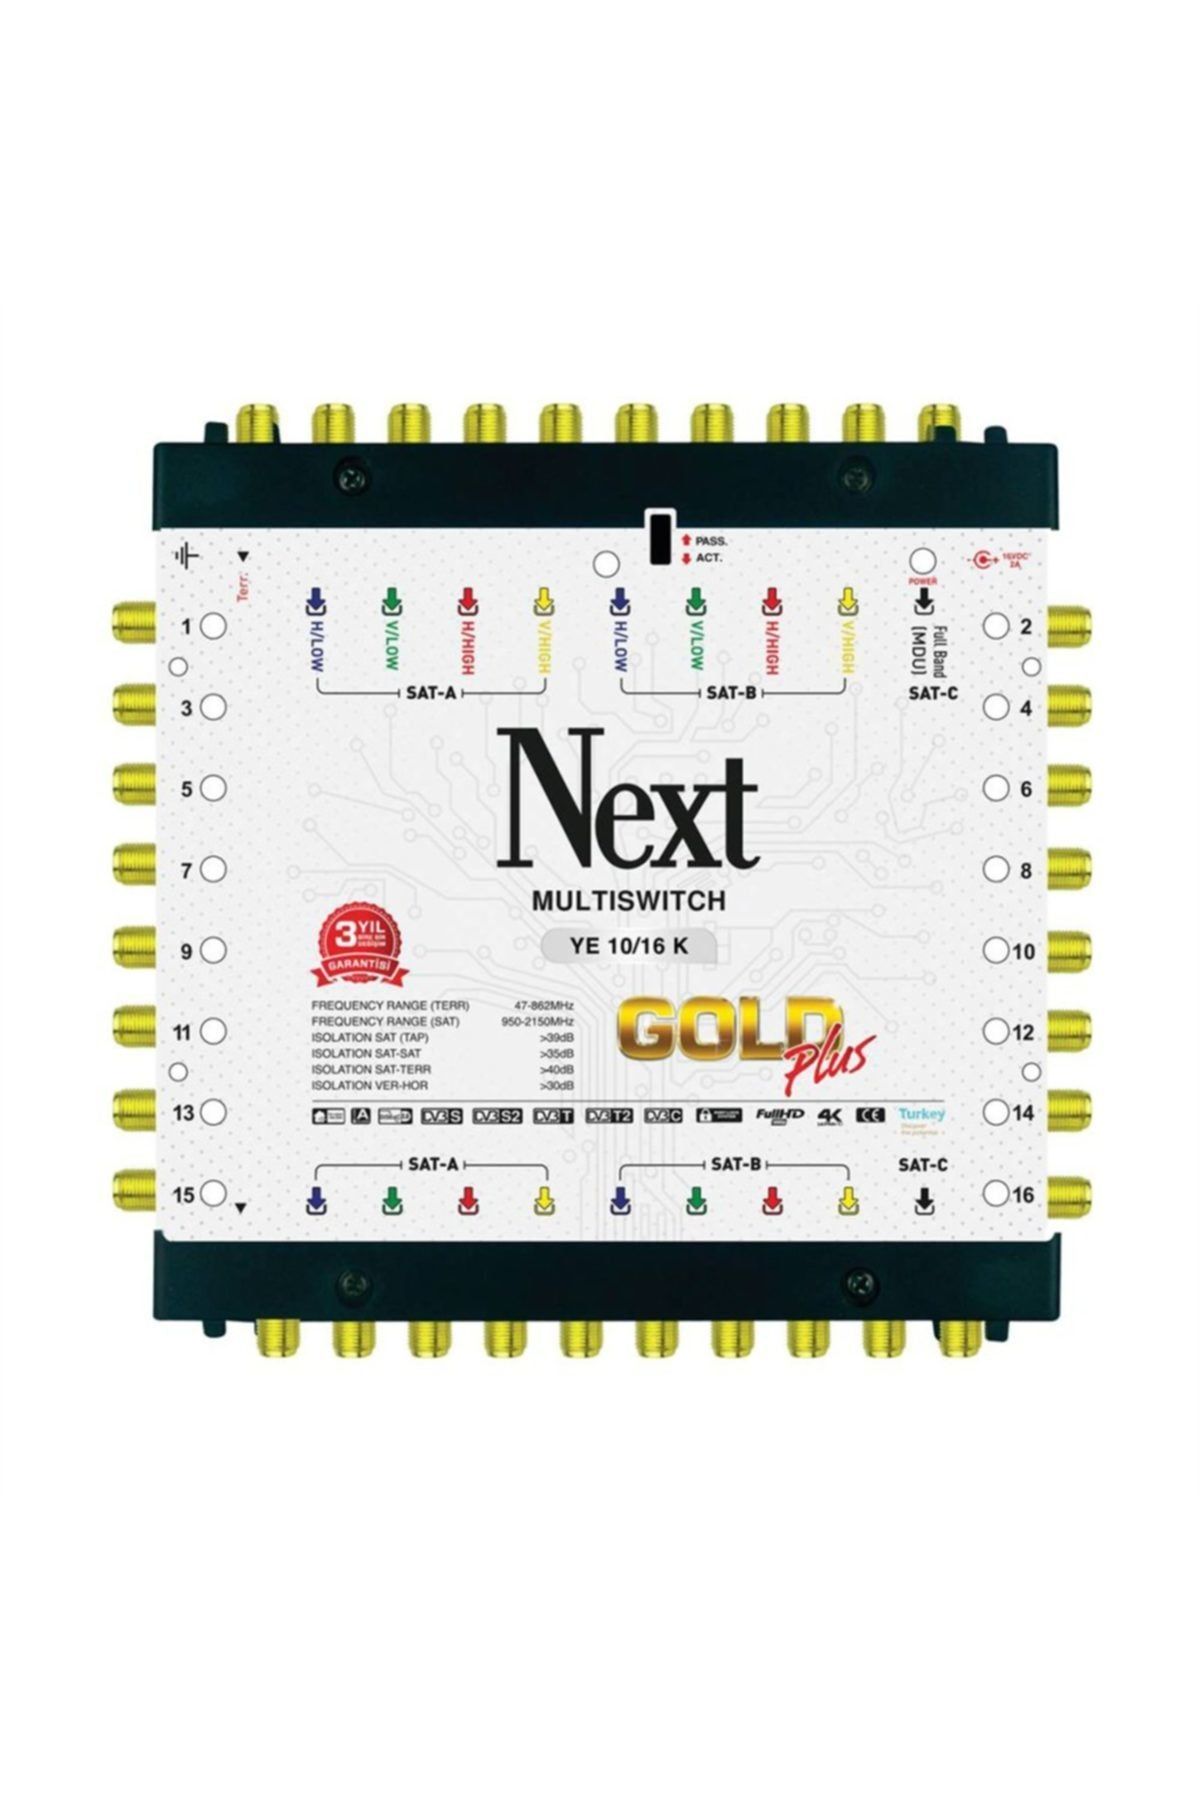 Next Nextstar Next 10/16 Kaskatlı Gold Plus Multiswitch Uydu Santrali